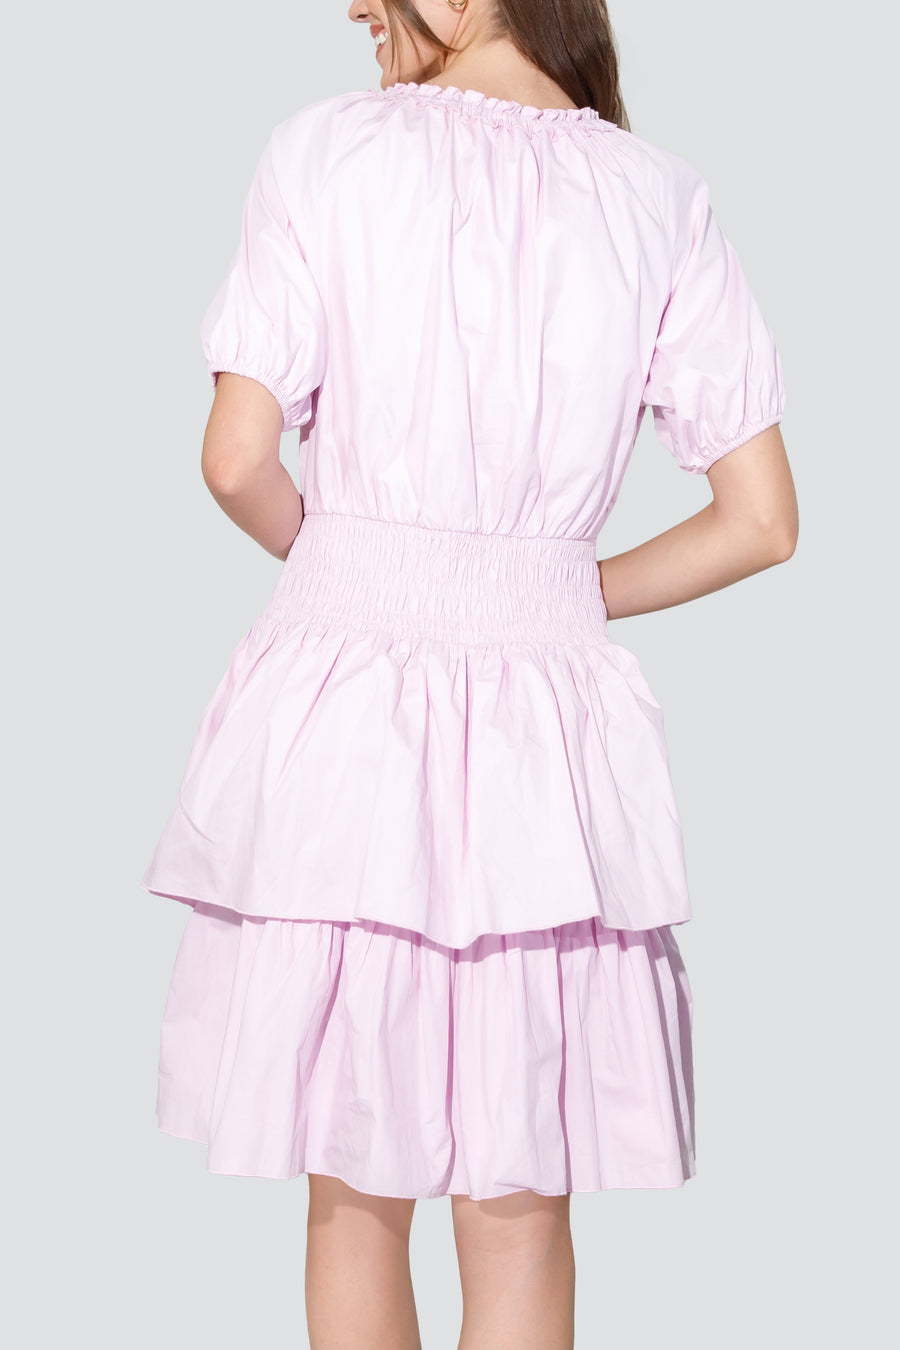 ZENA DRESS Short Sleeve (LIGHT LILAC) 39"